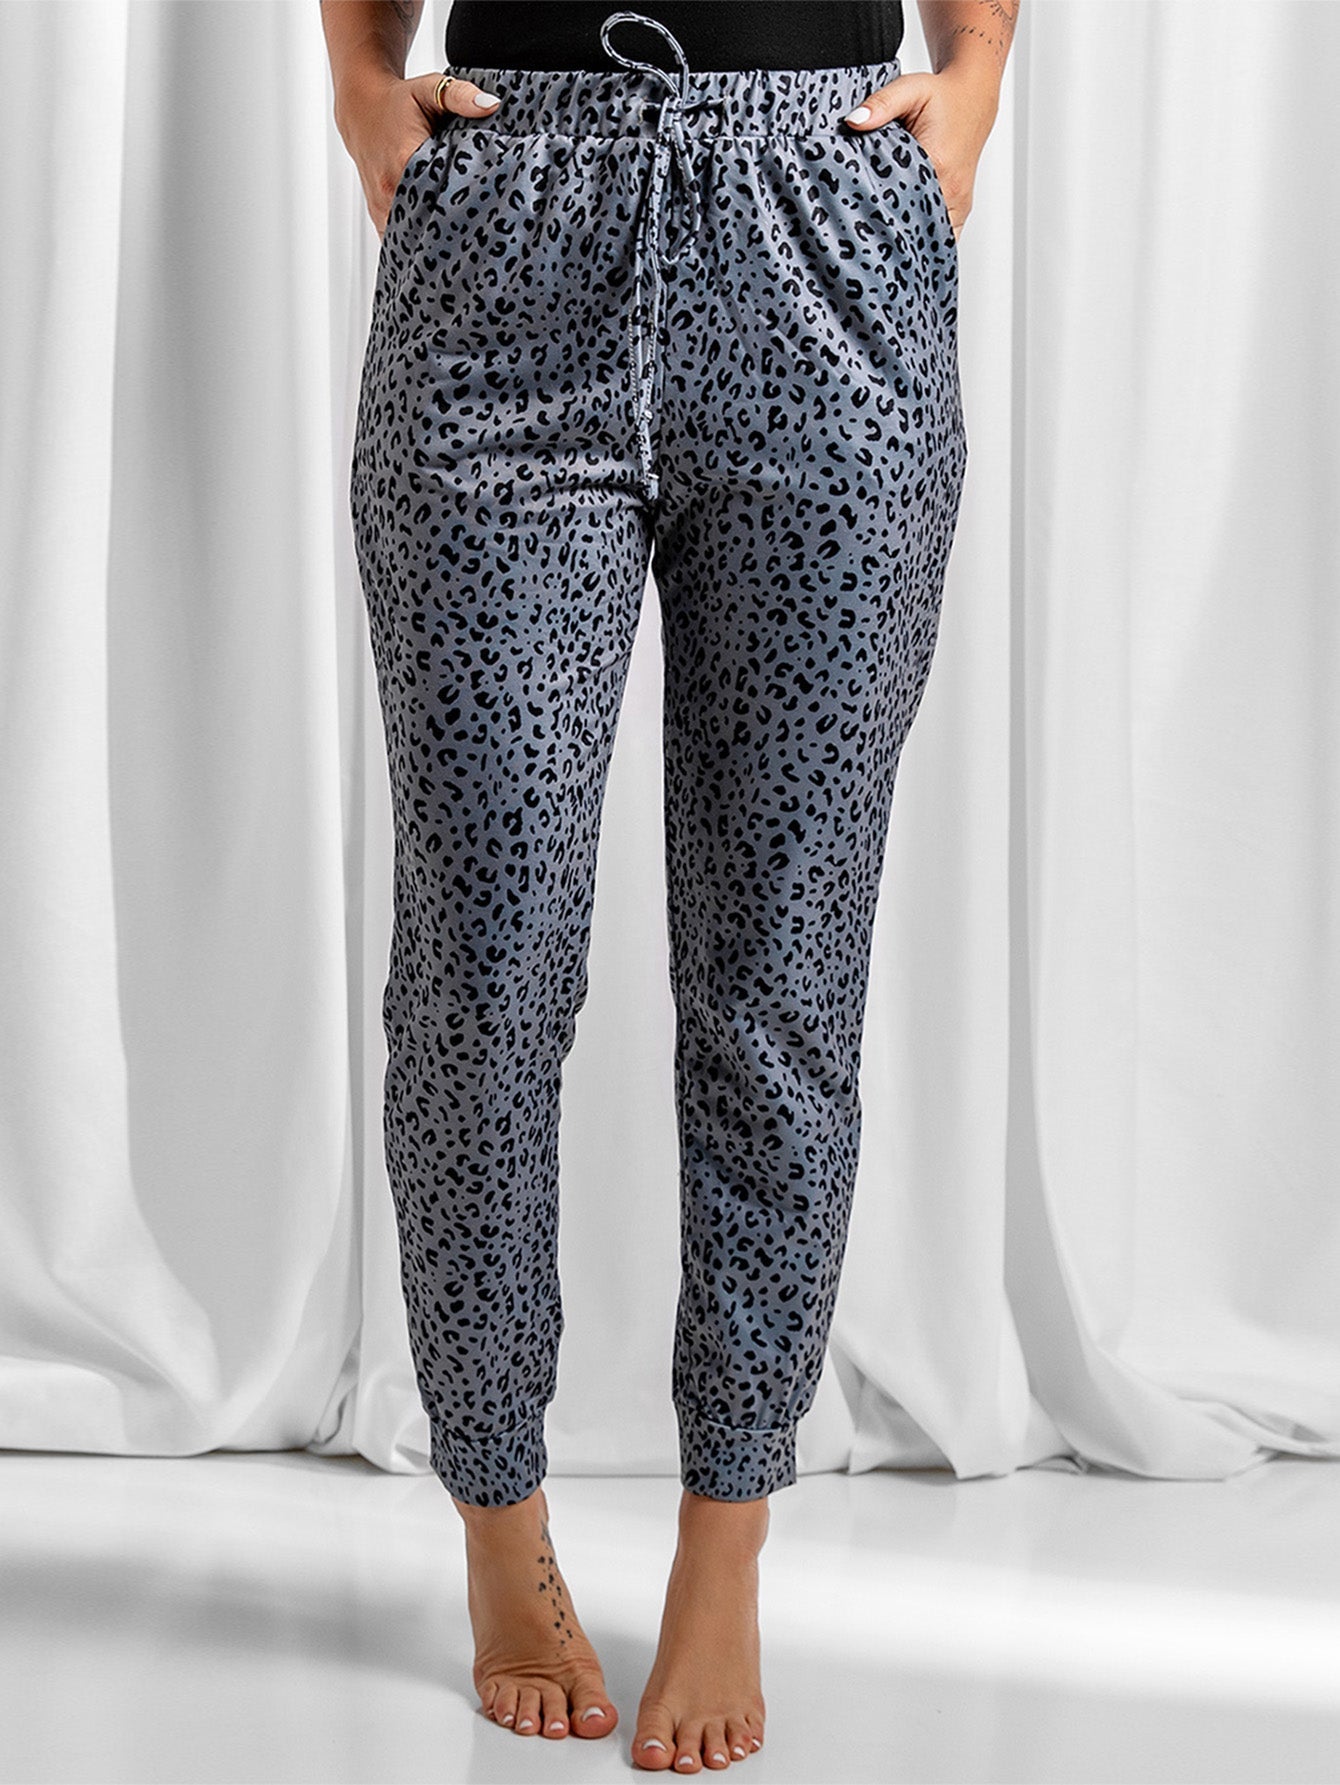 Breezy Leopard Sweatpants Side Pockets Elastic Waistline Cuffs Drawstring Loose Fit Casual Trousers Sai Feel